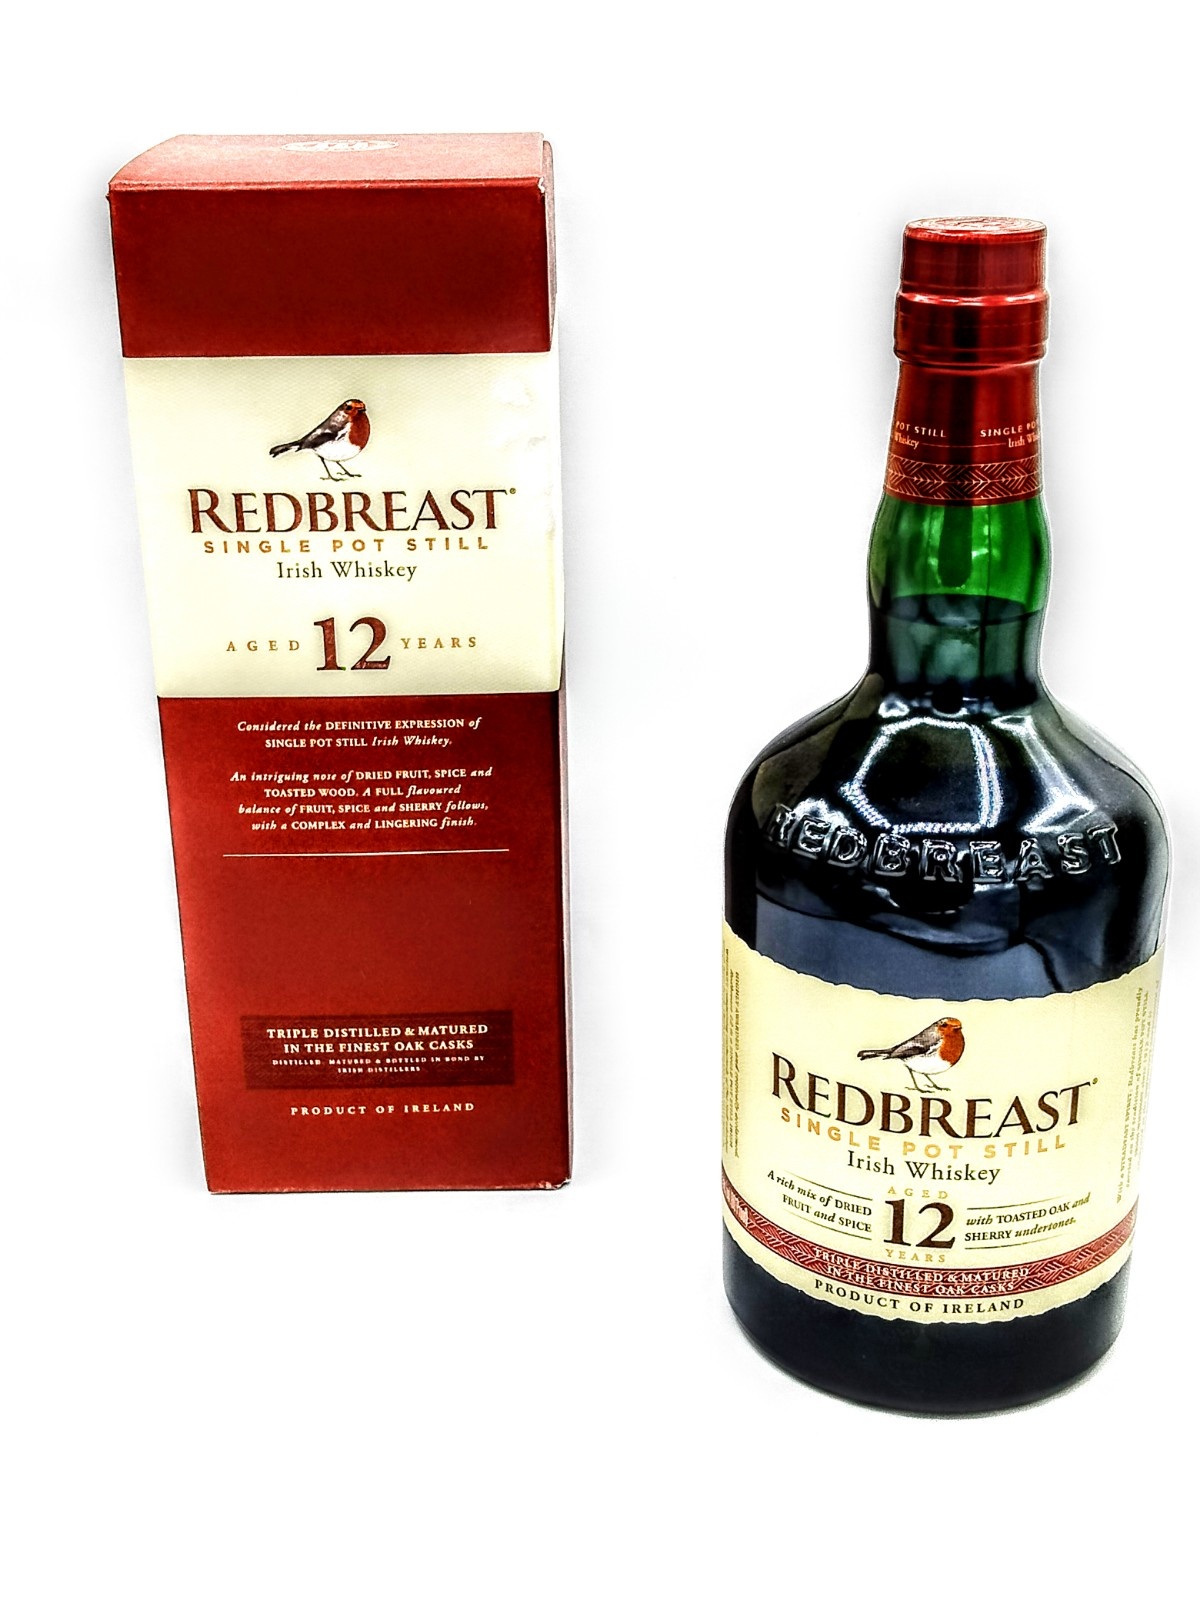 Redbreast 12yr Irish Whiskey "Single Pot Still" (80 proof) 750ml